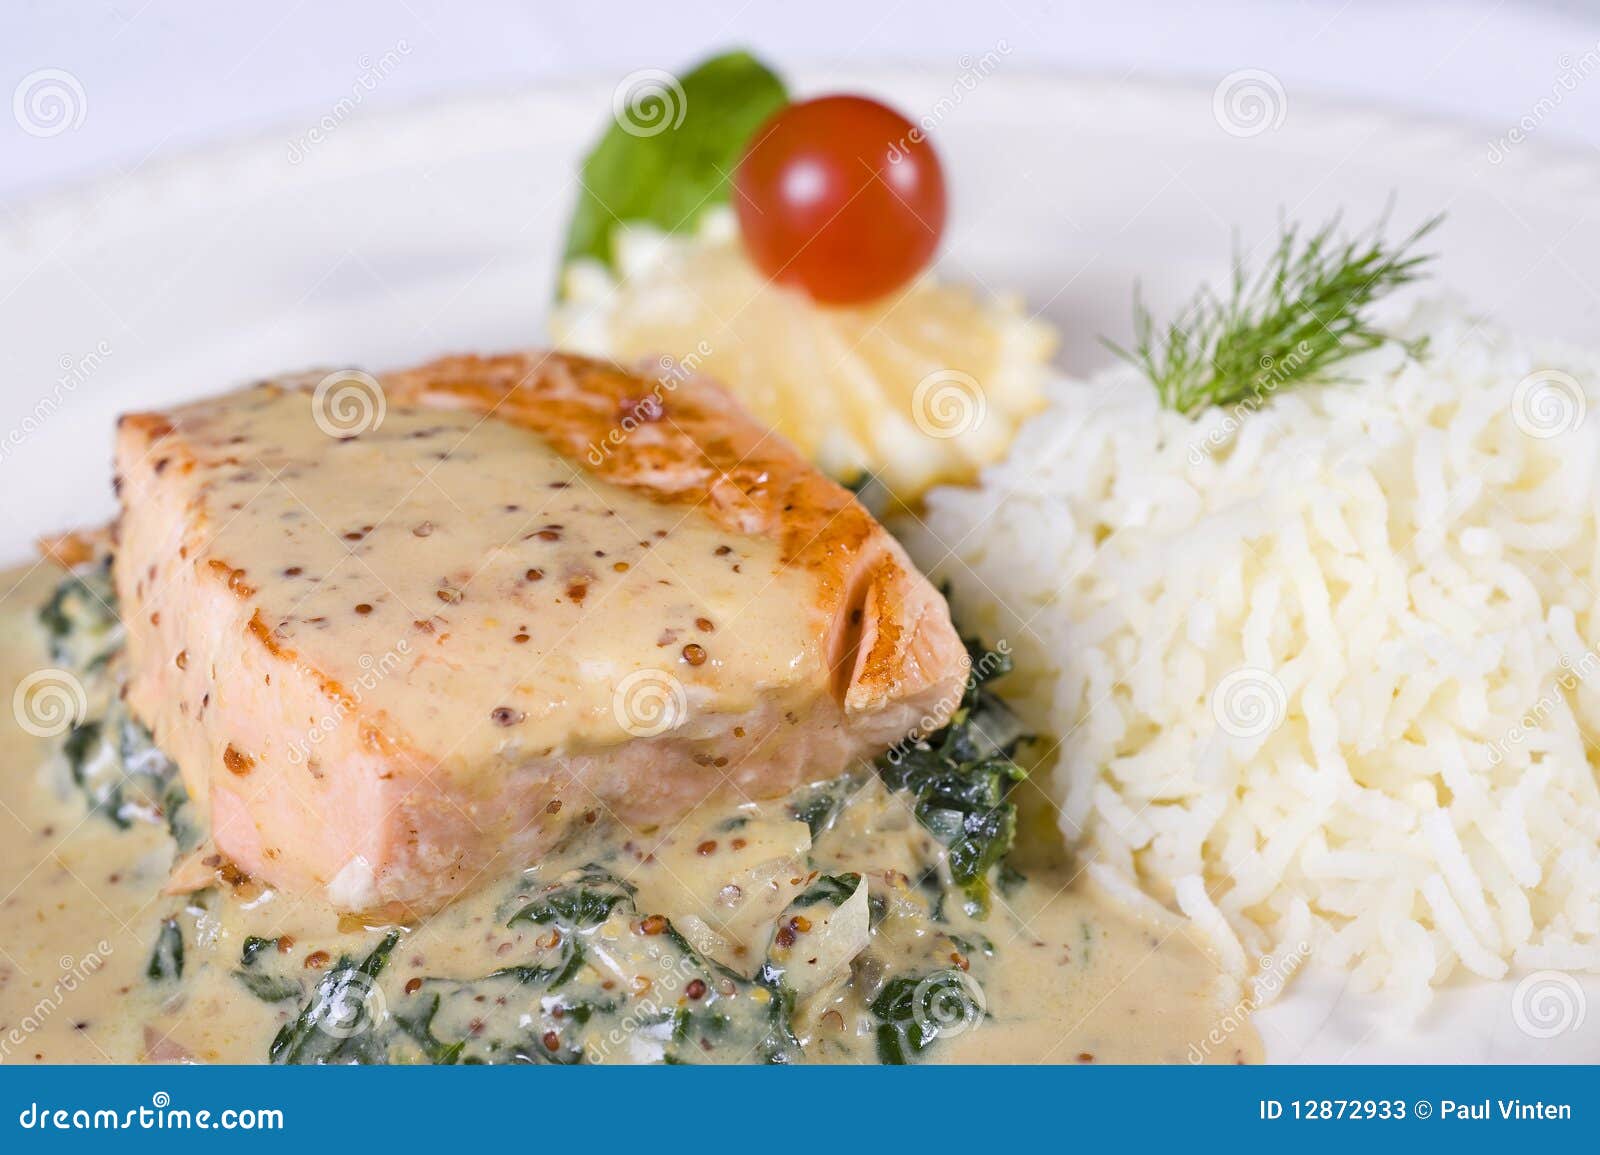 salmon fillet a la carte meal